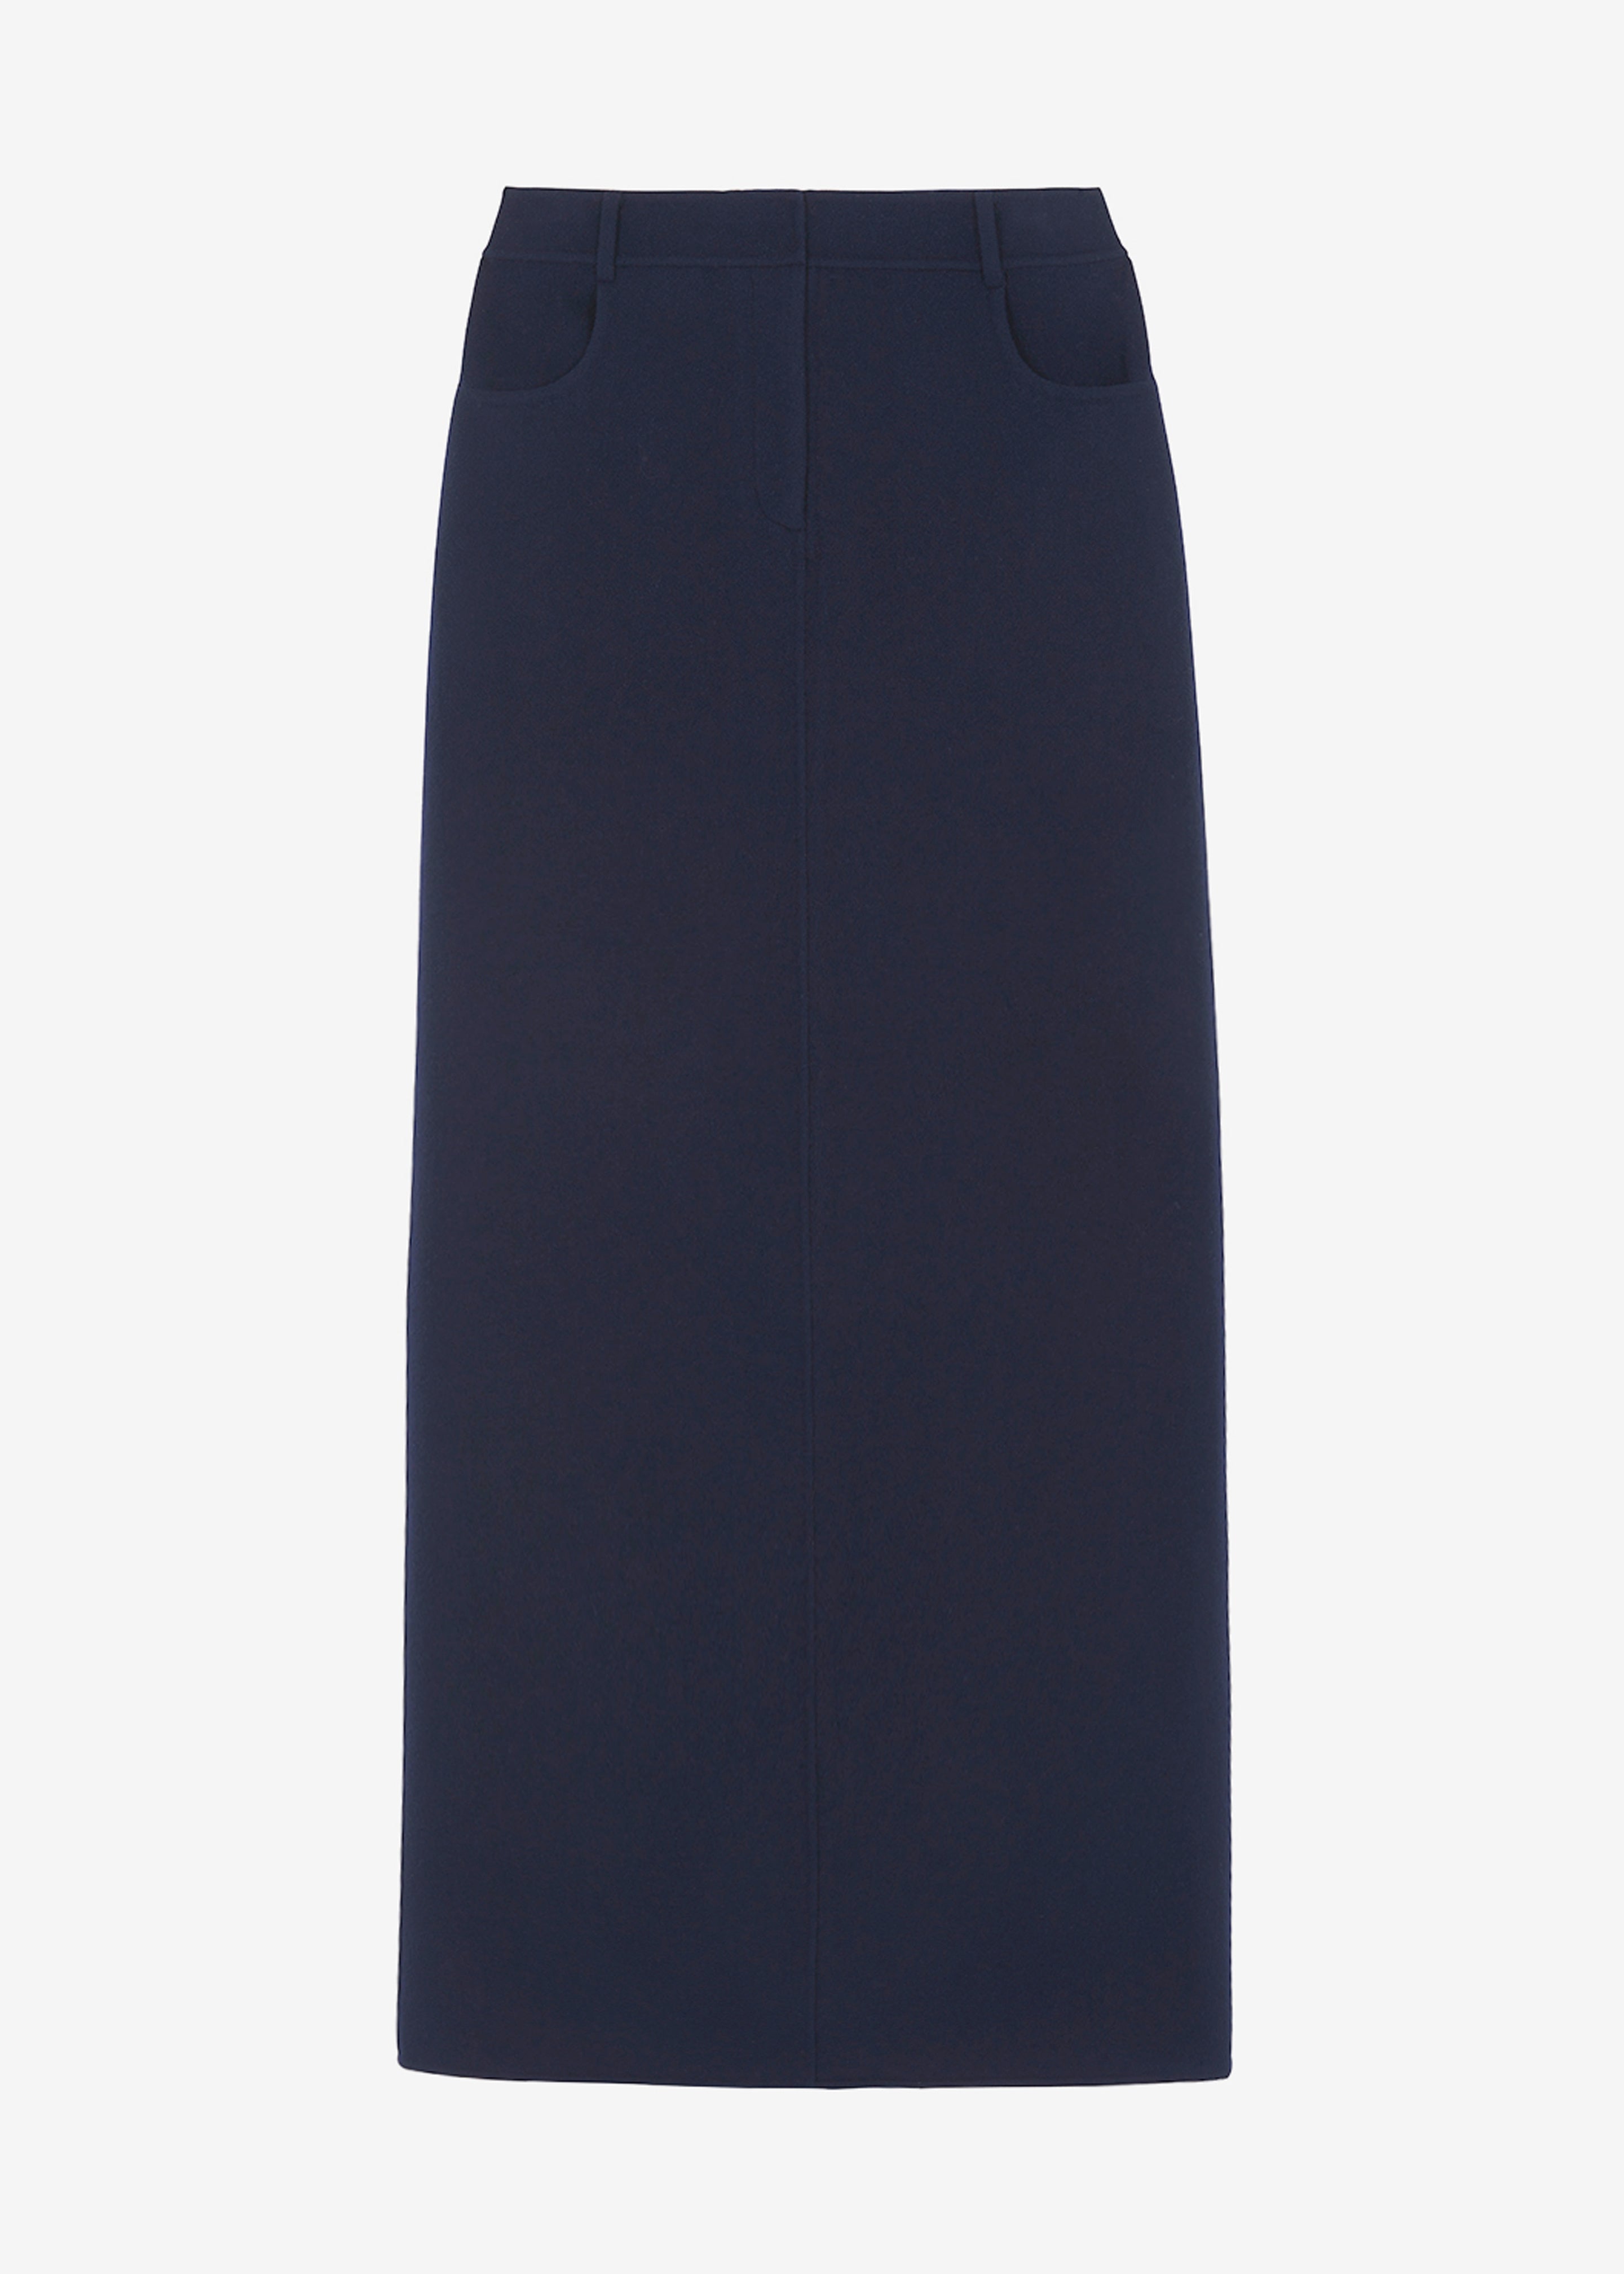 Malvo Long Wool Pencil Skirt - Navy - 8